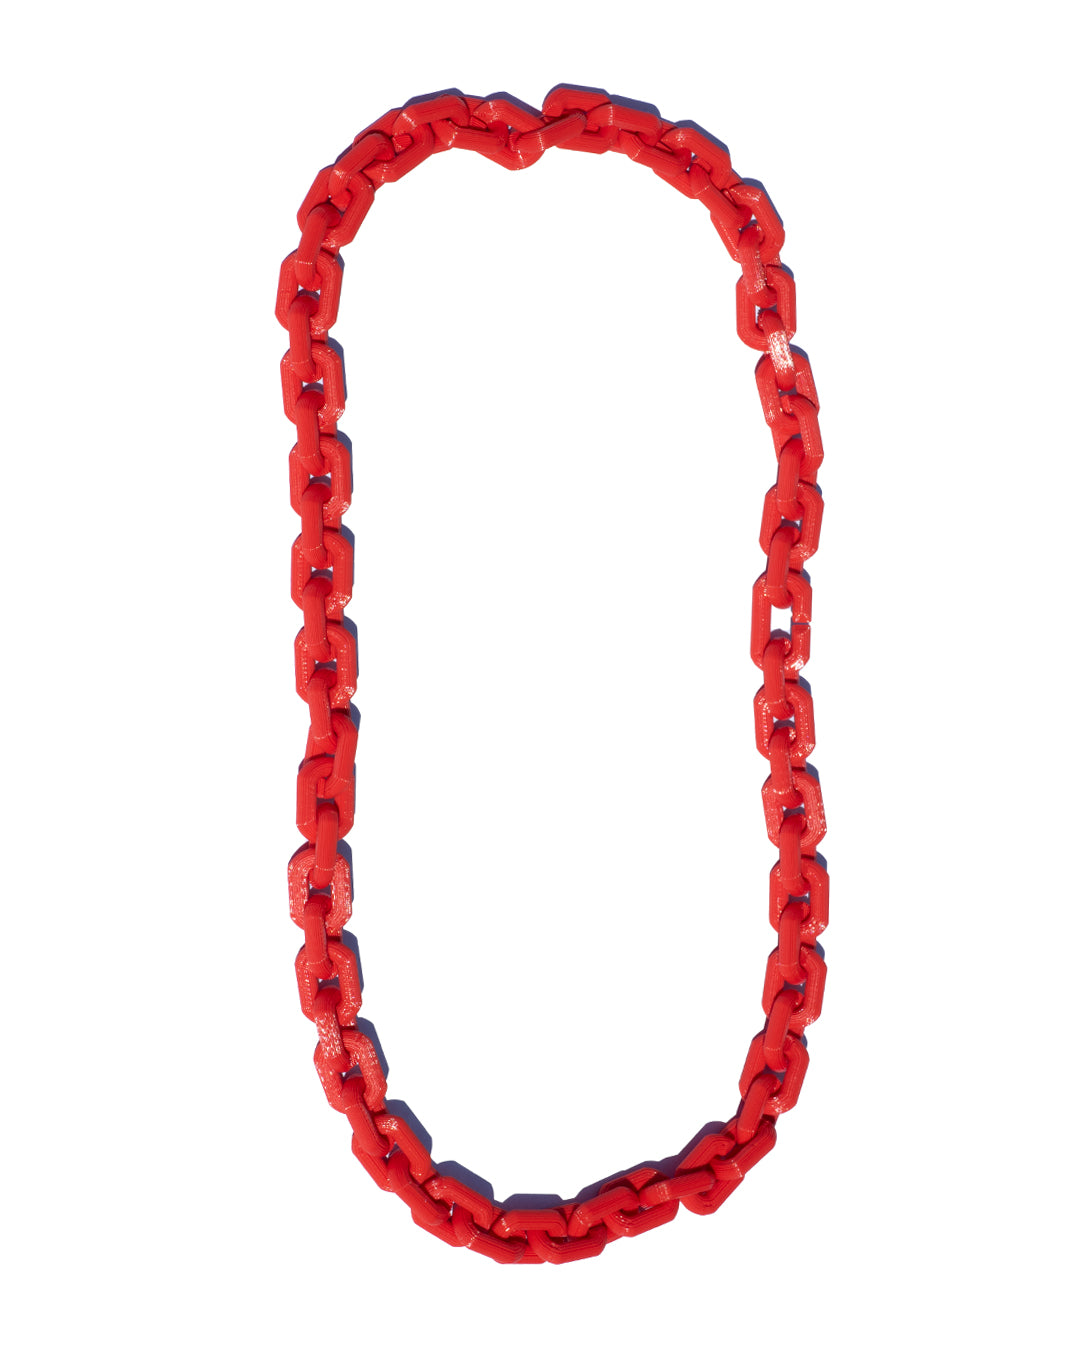 Handmade bio plastic colorful chain necklace - Rahrah